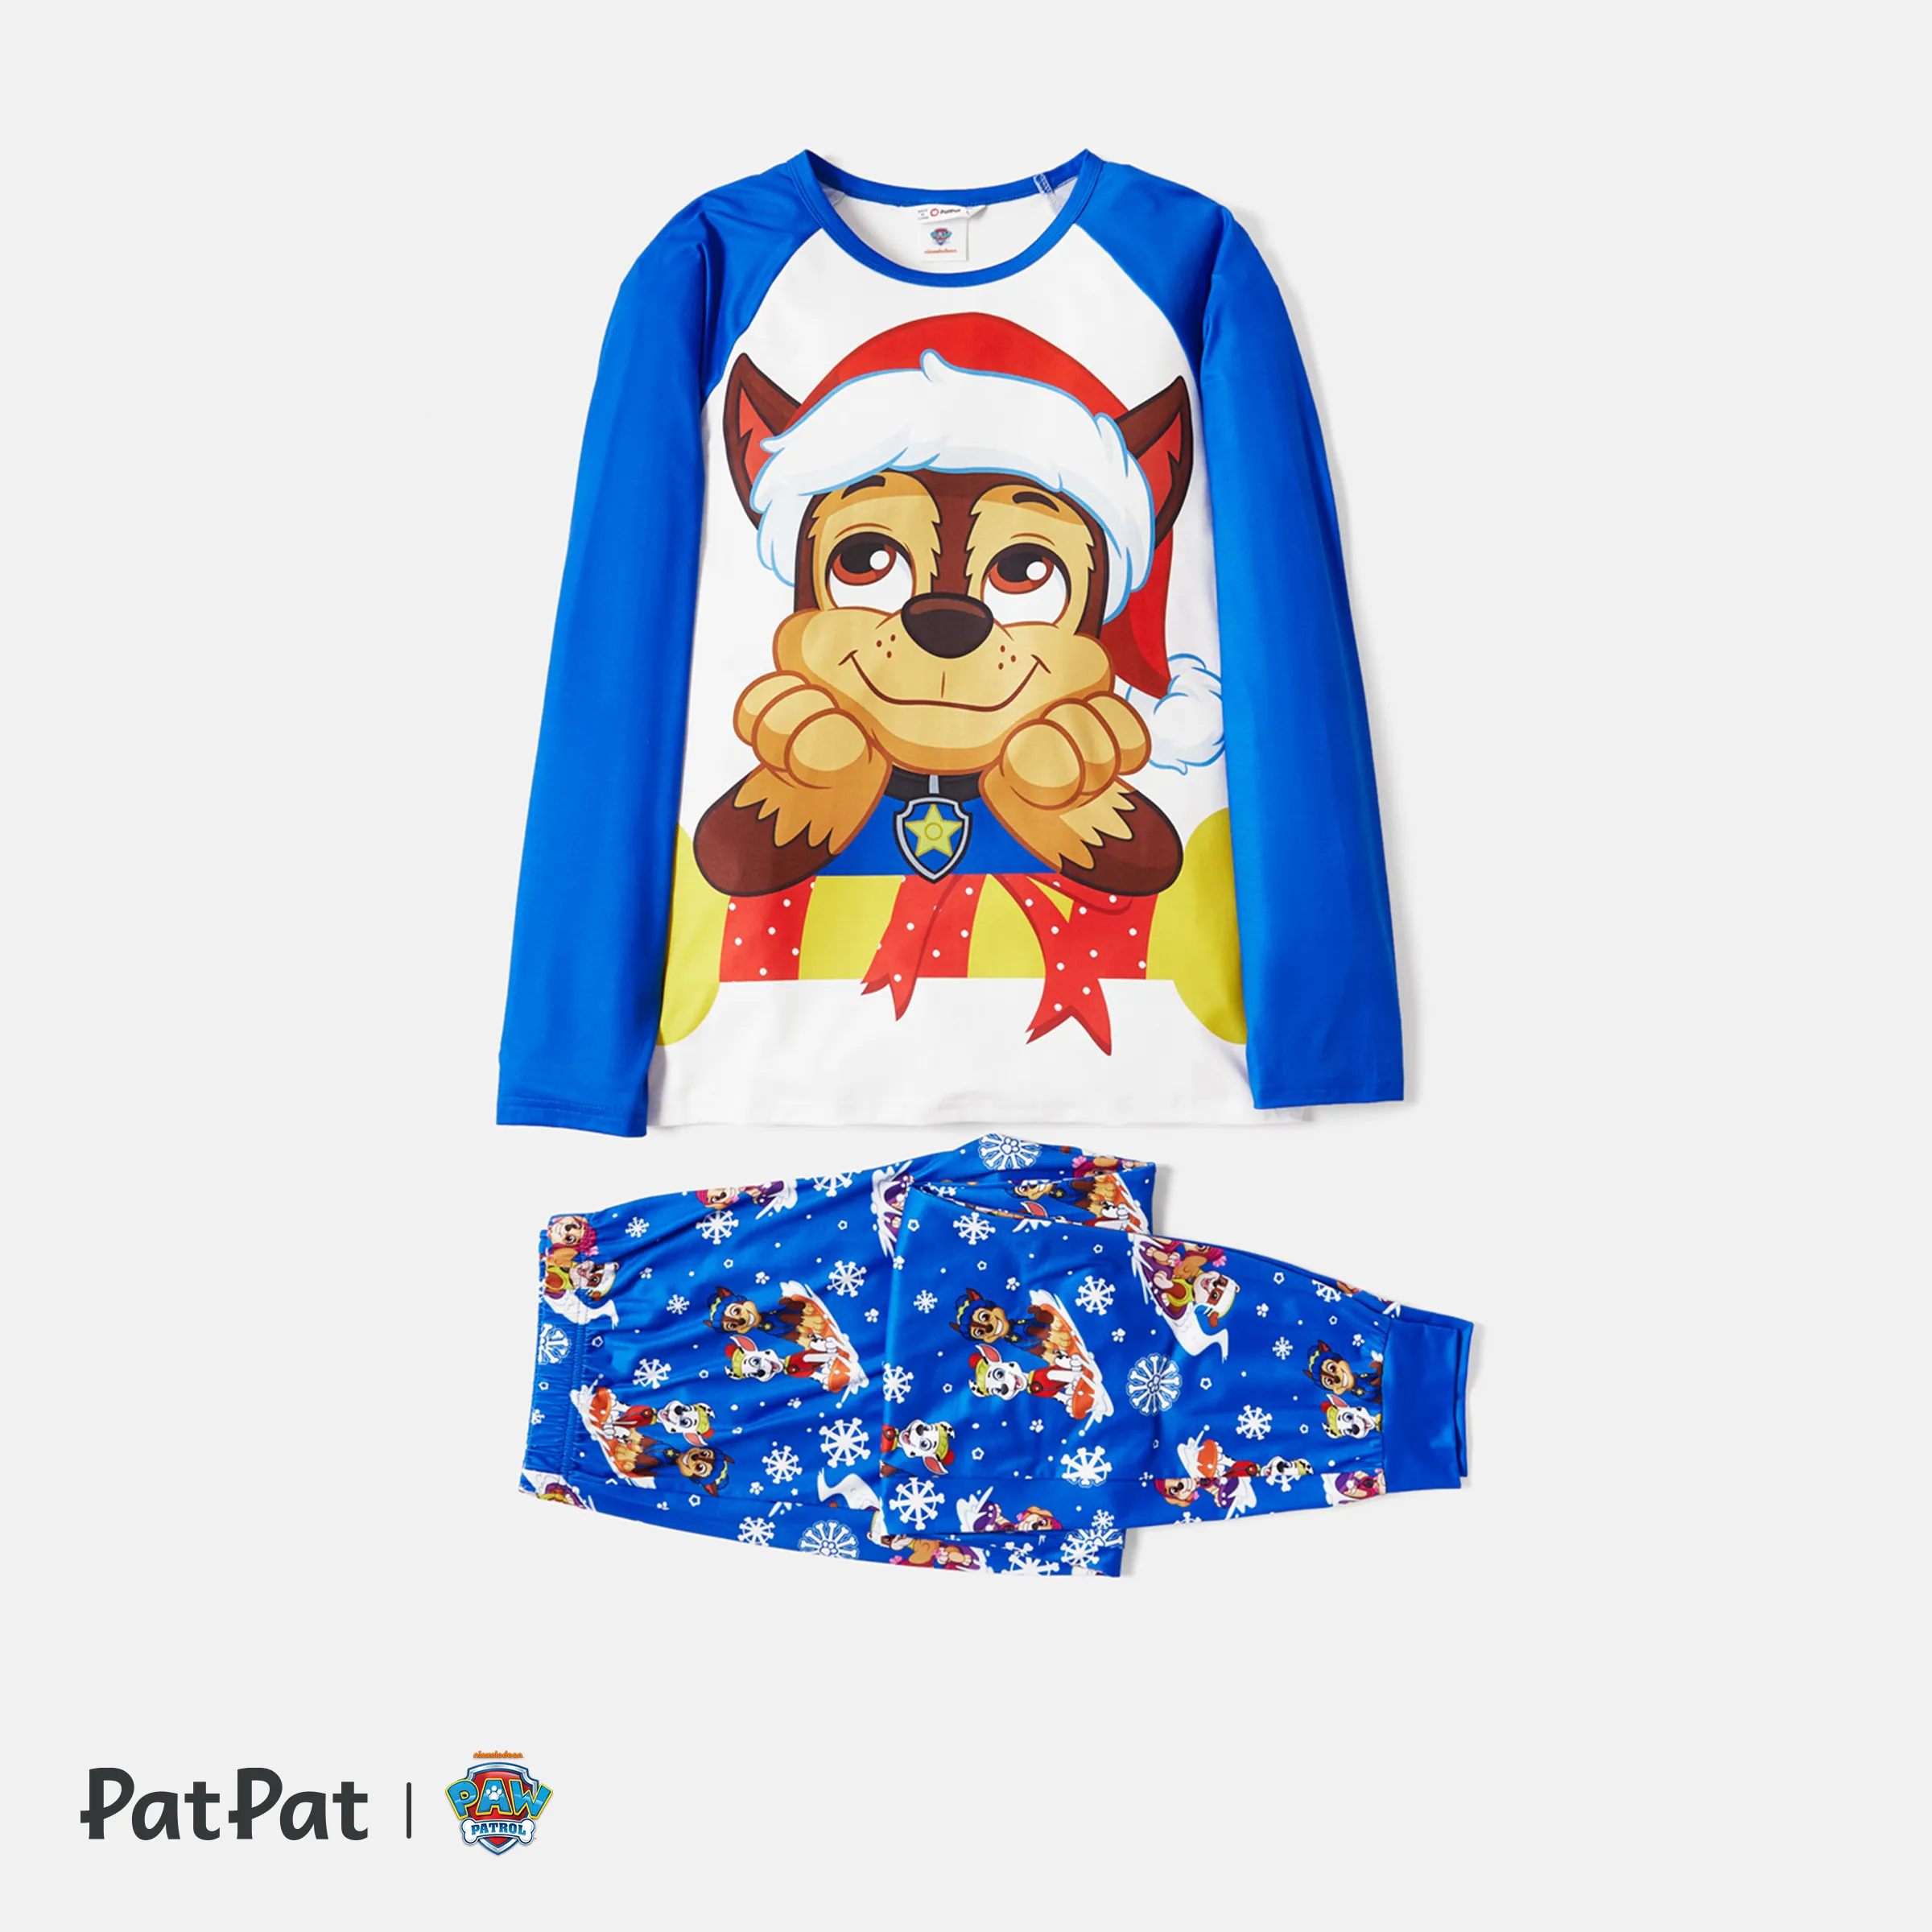 PAW Patrol Big Graphic Christmas Family Matching Pajamas Sets(Flame Resistant)